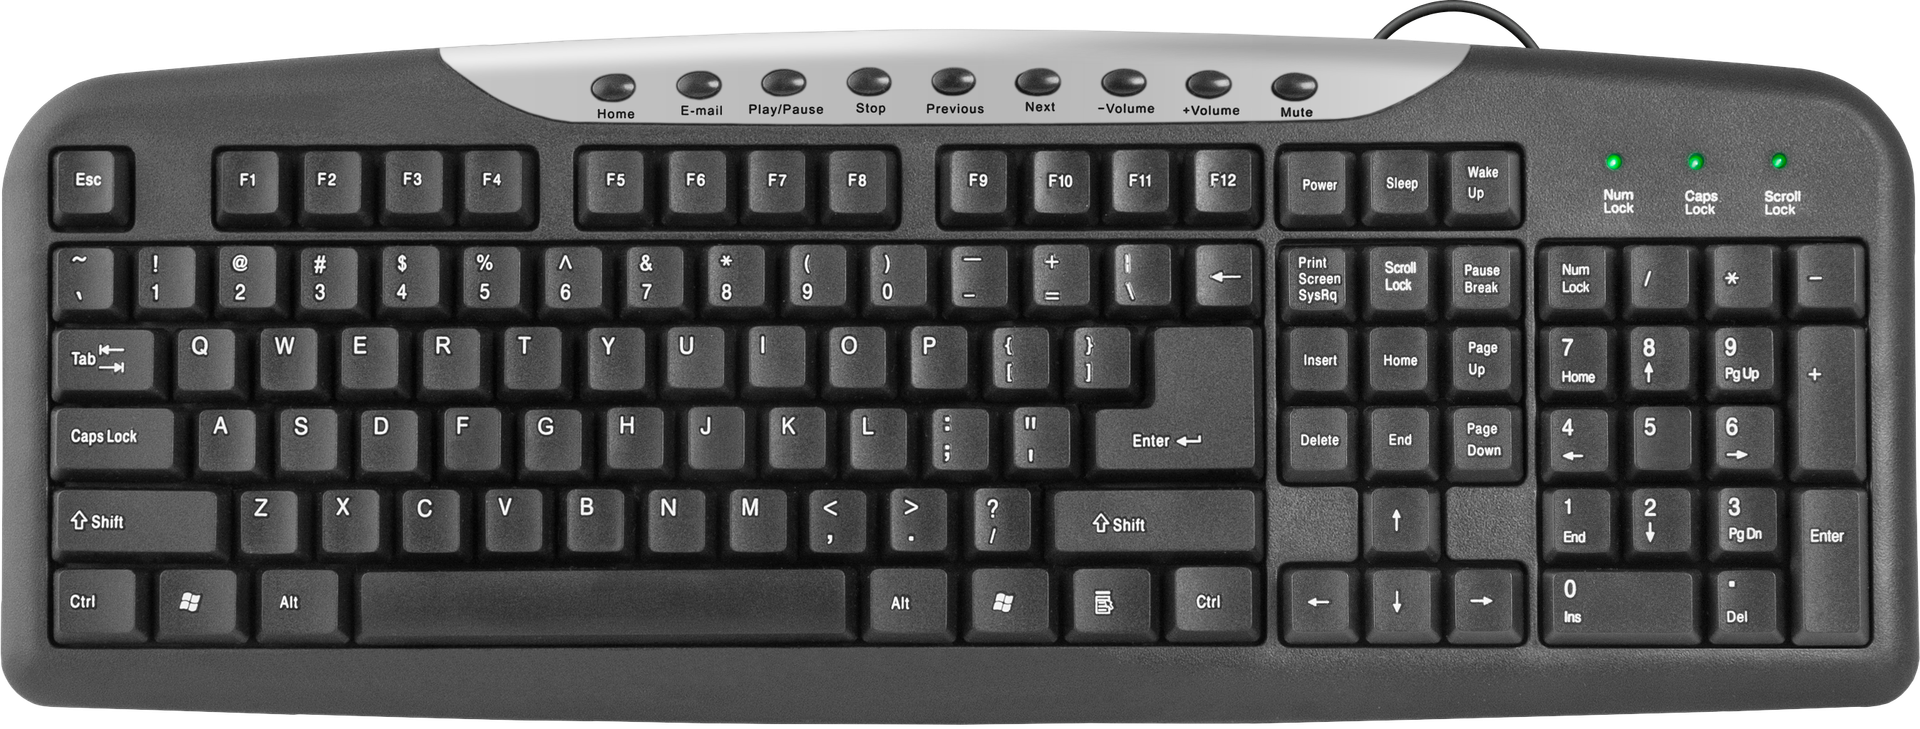 Клавиатура DEFENDER HM-830 RU,черый,полноразмерная